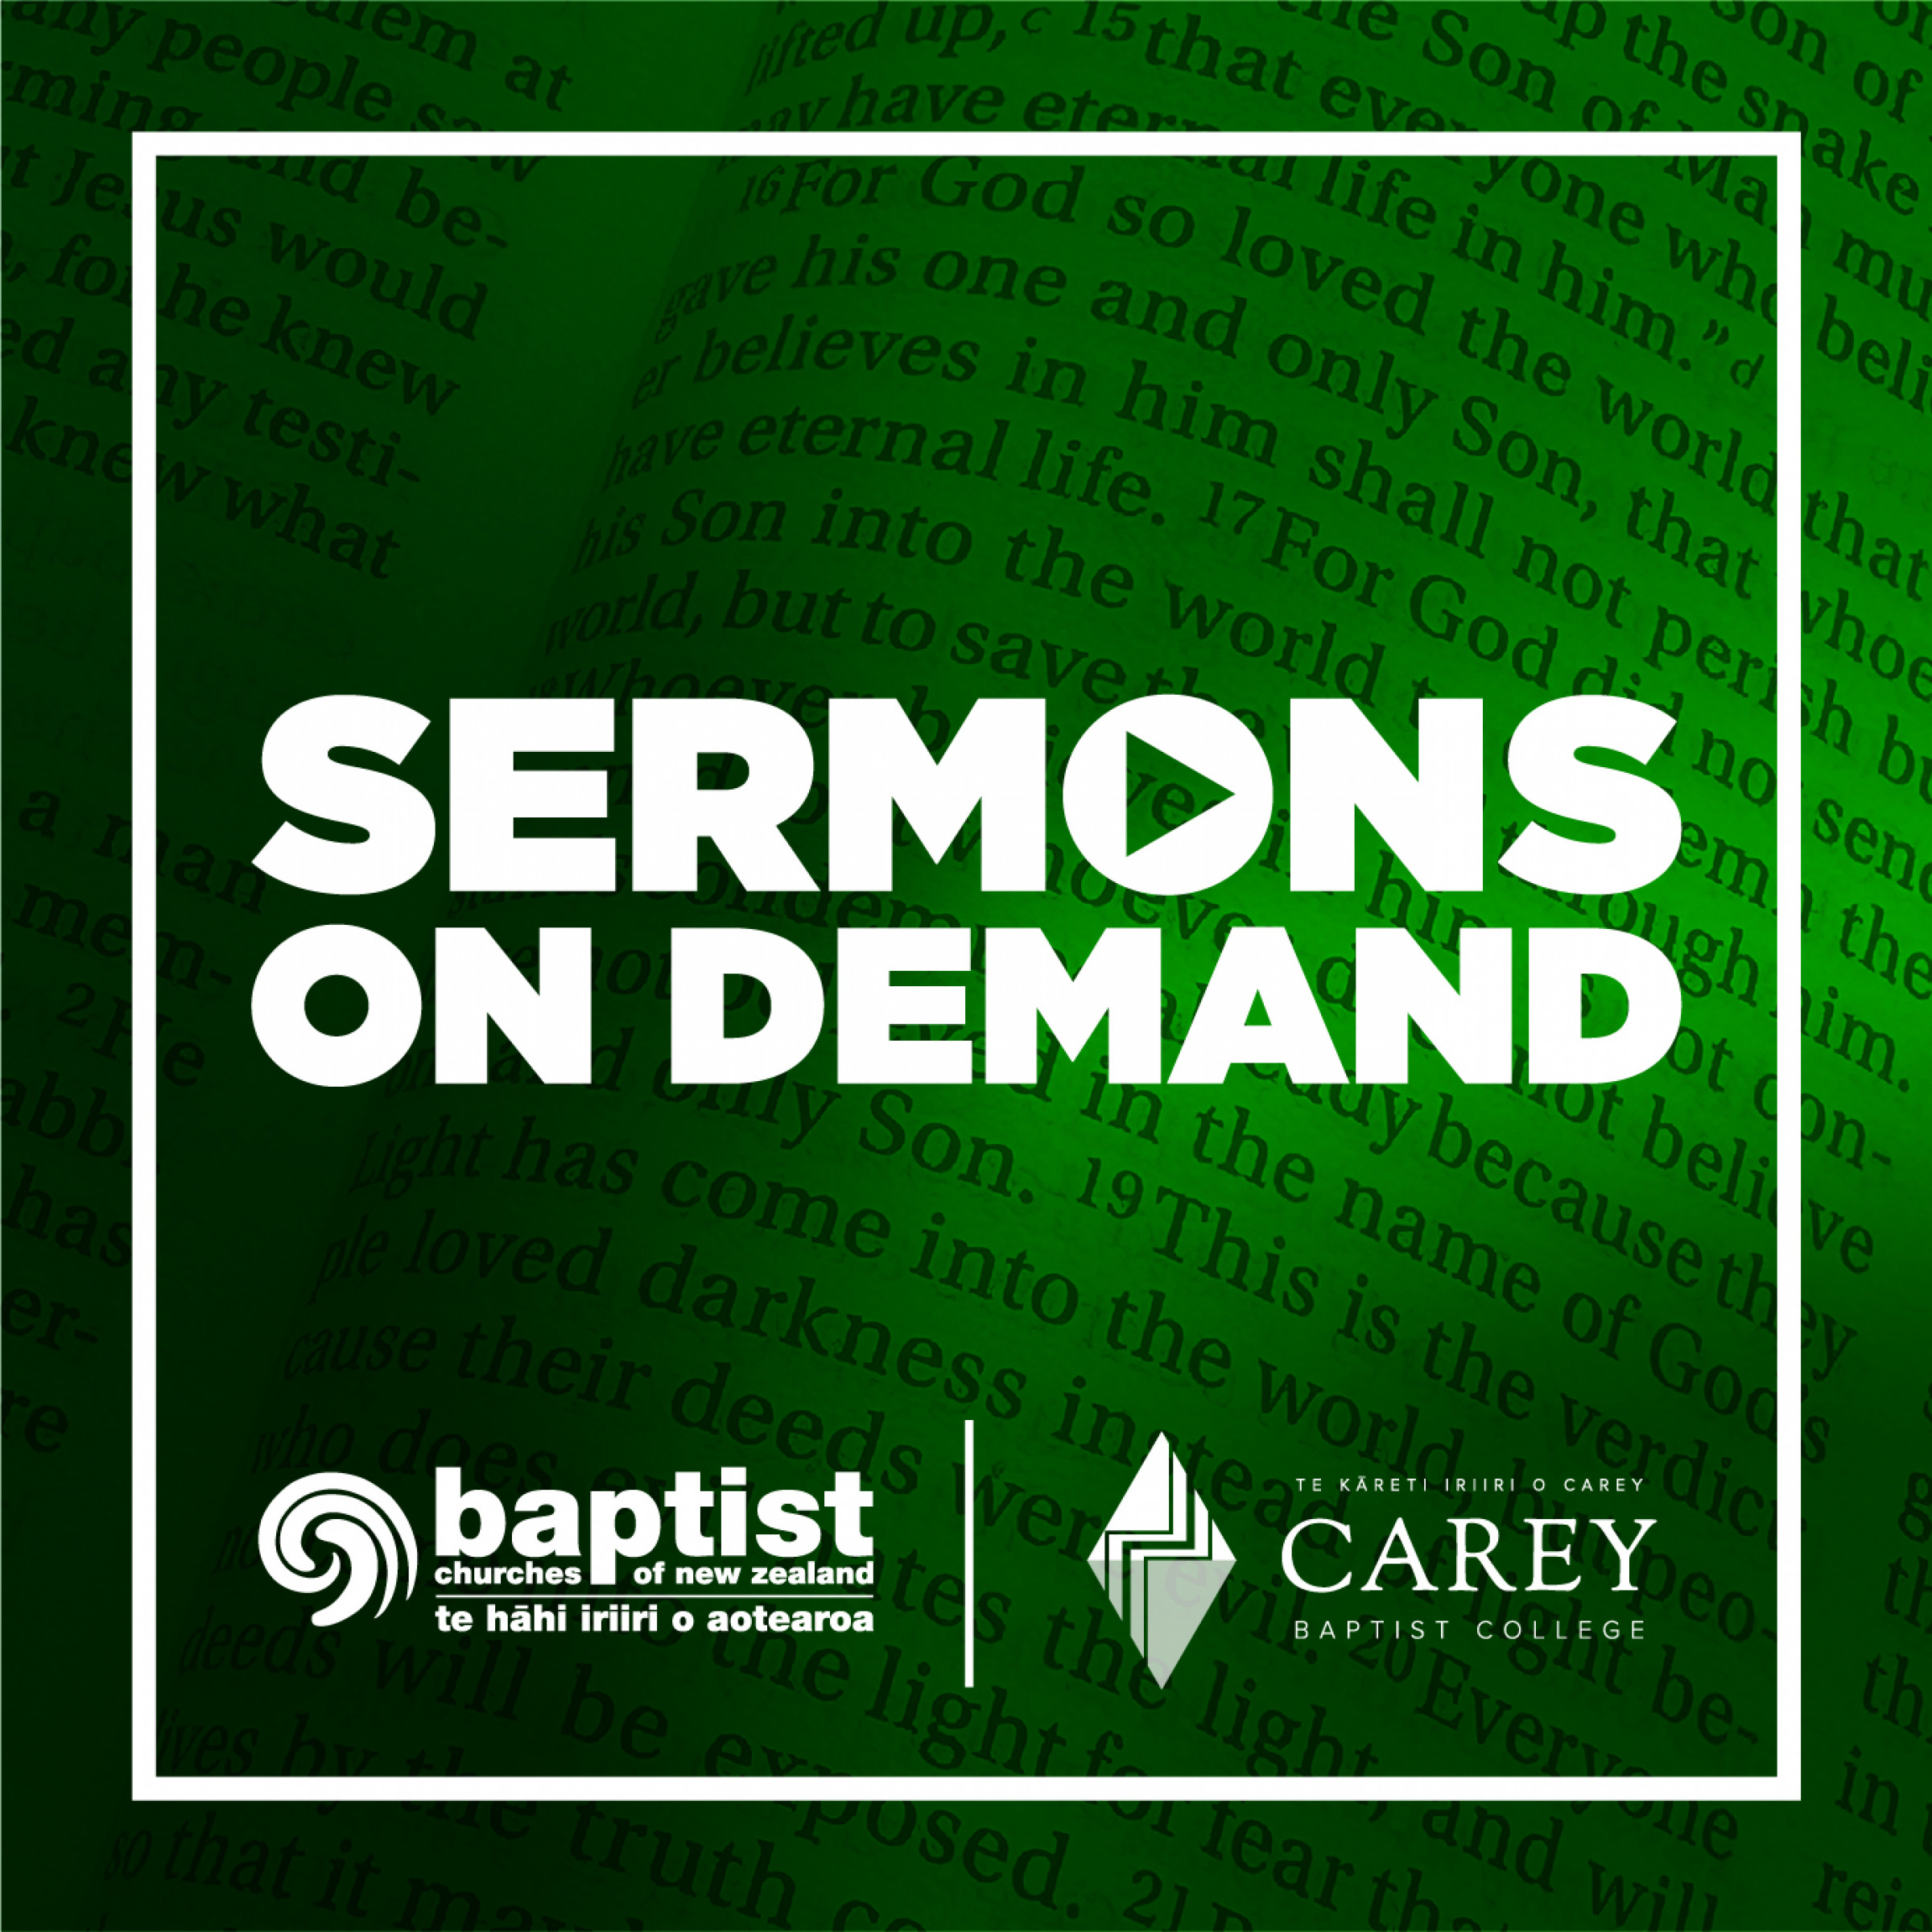 Sermons on demand: 2023 Image